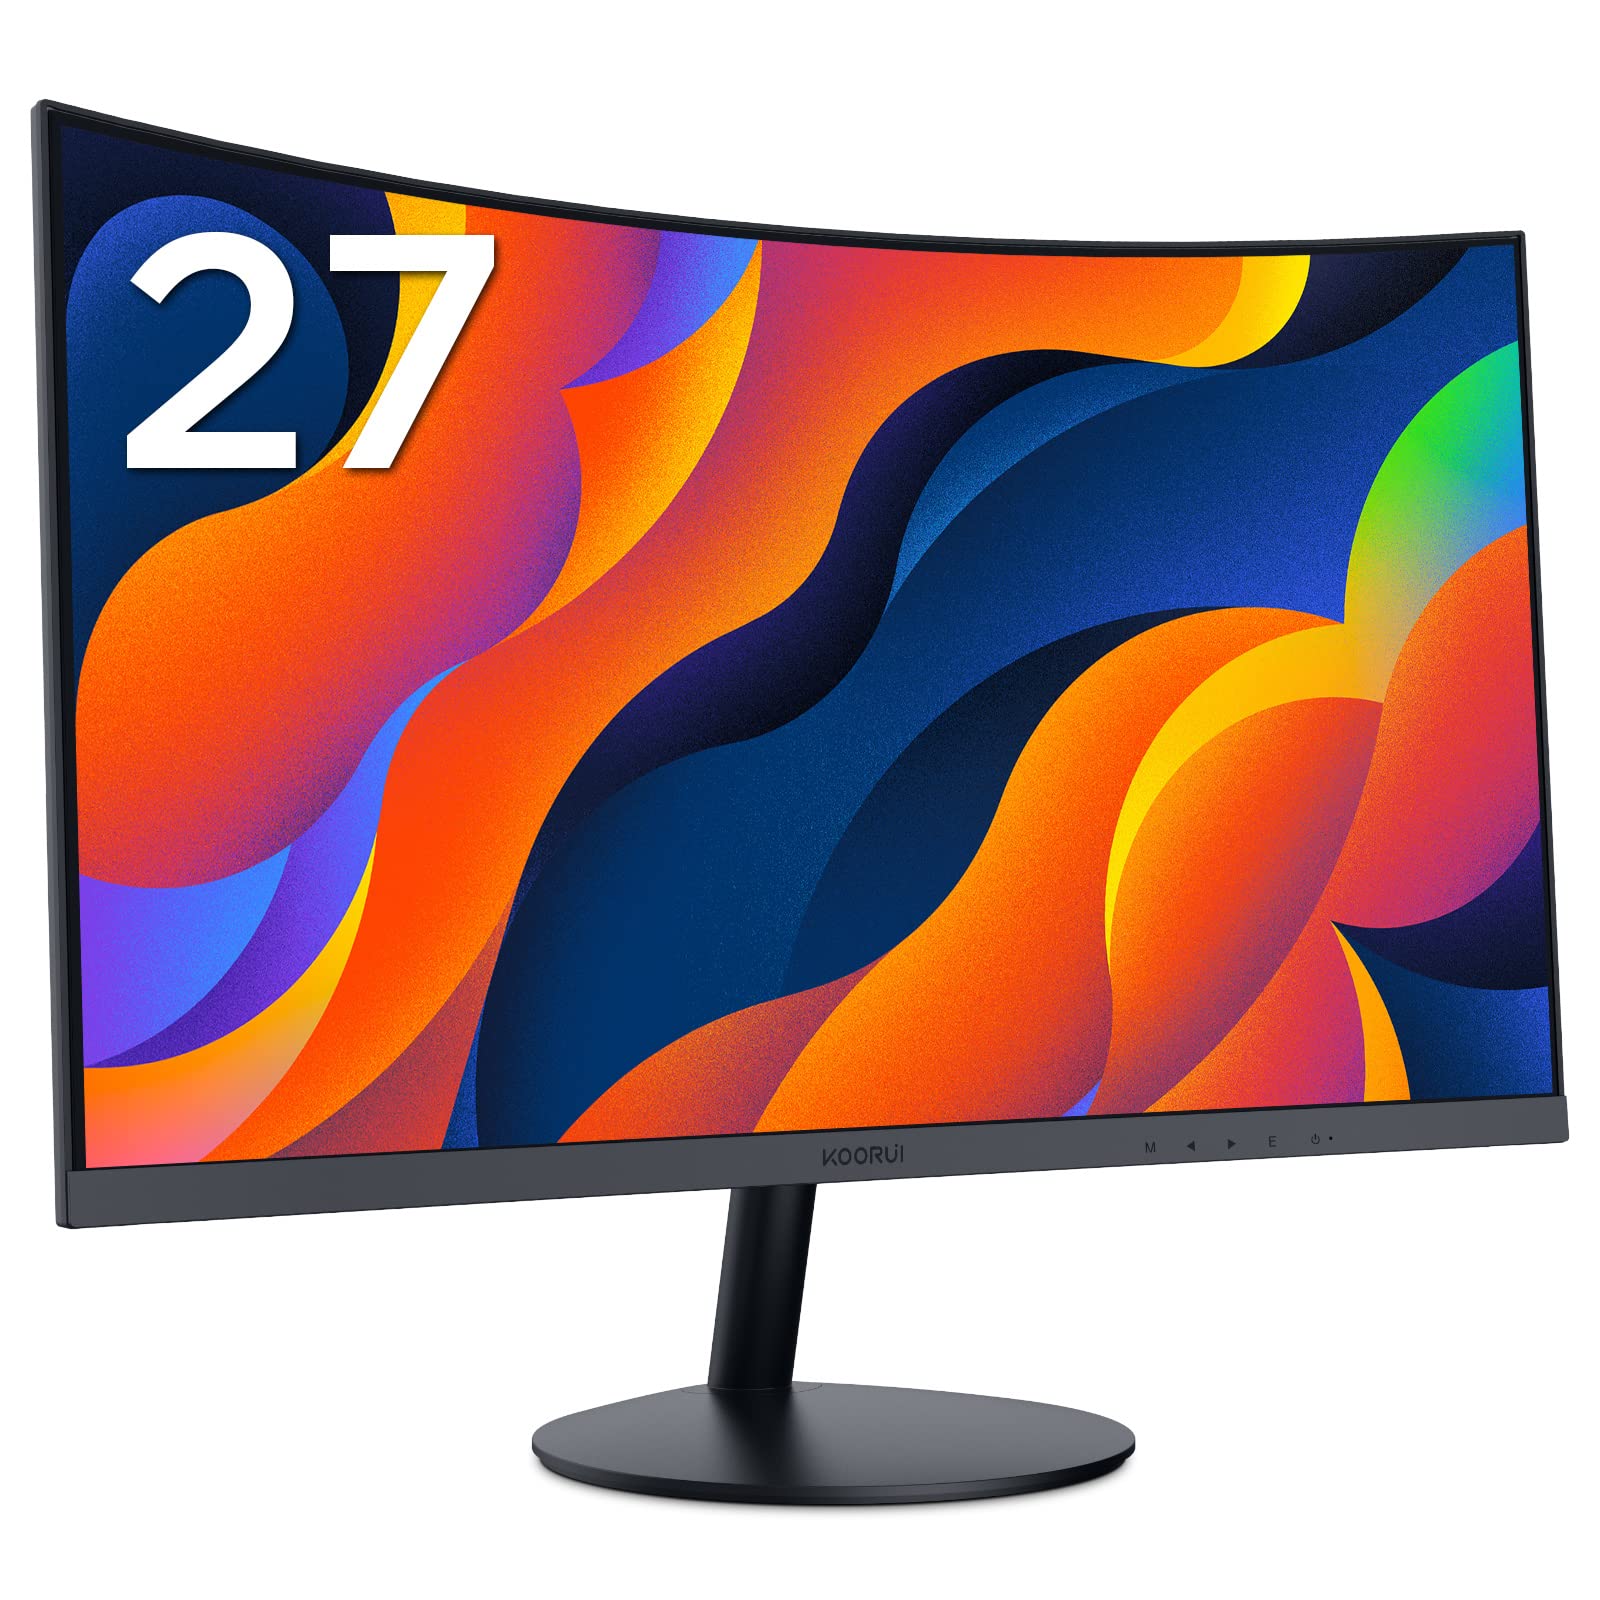 27 inch computer monitor